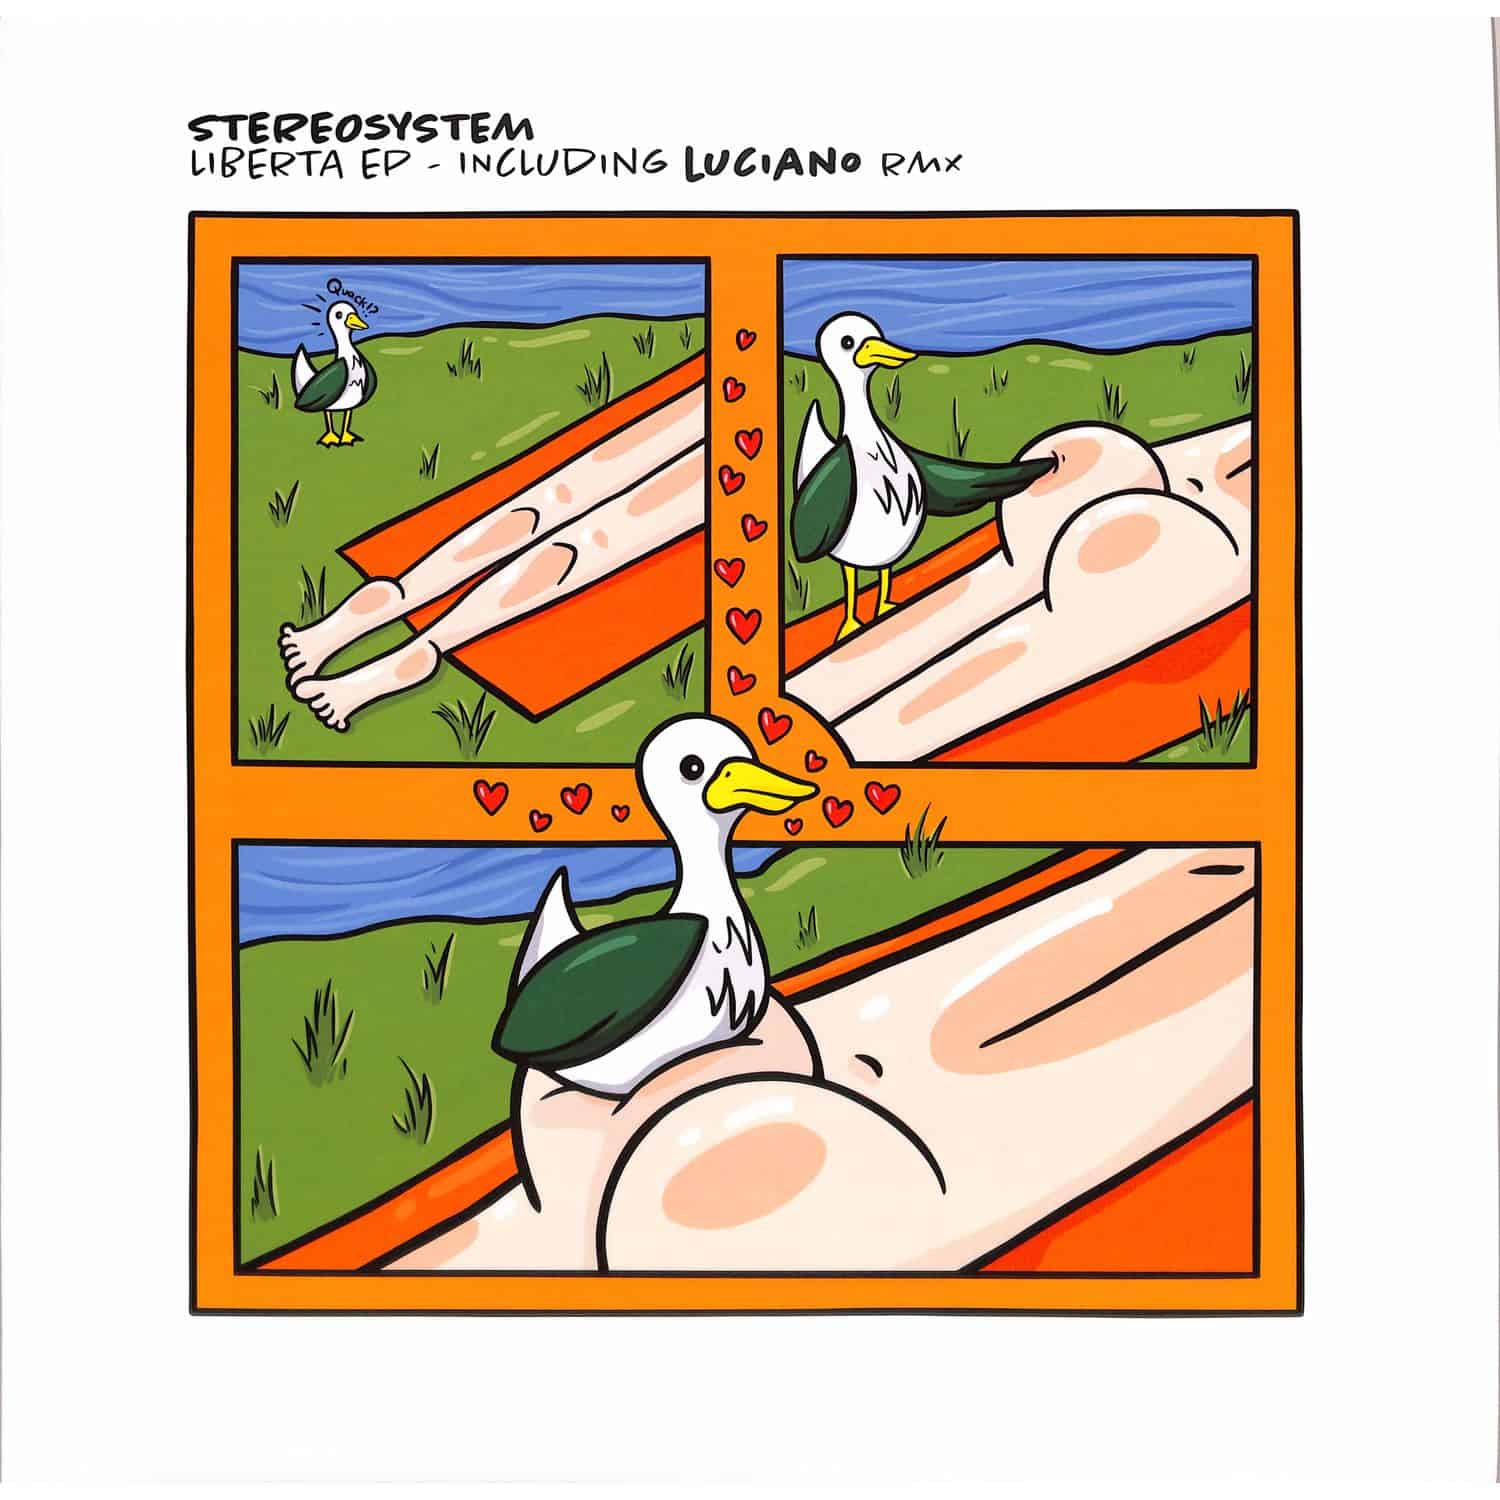 Stereosystem - LIBERTA EP 